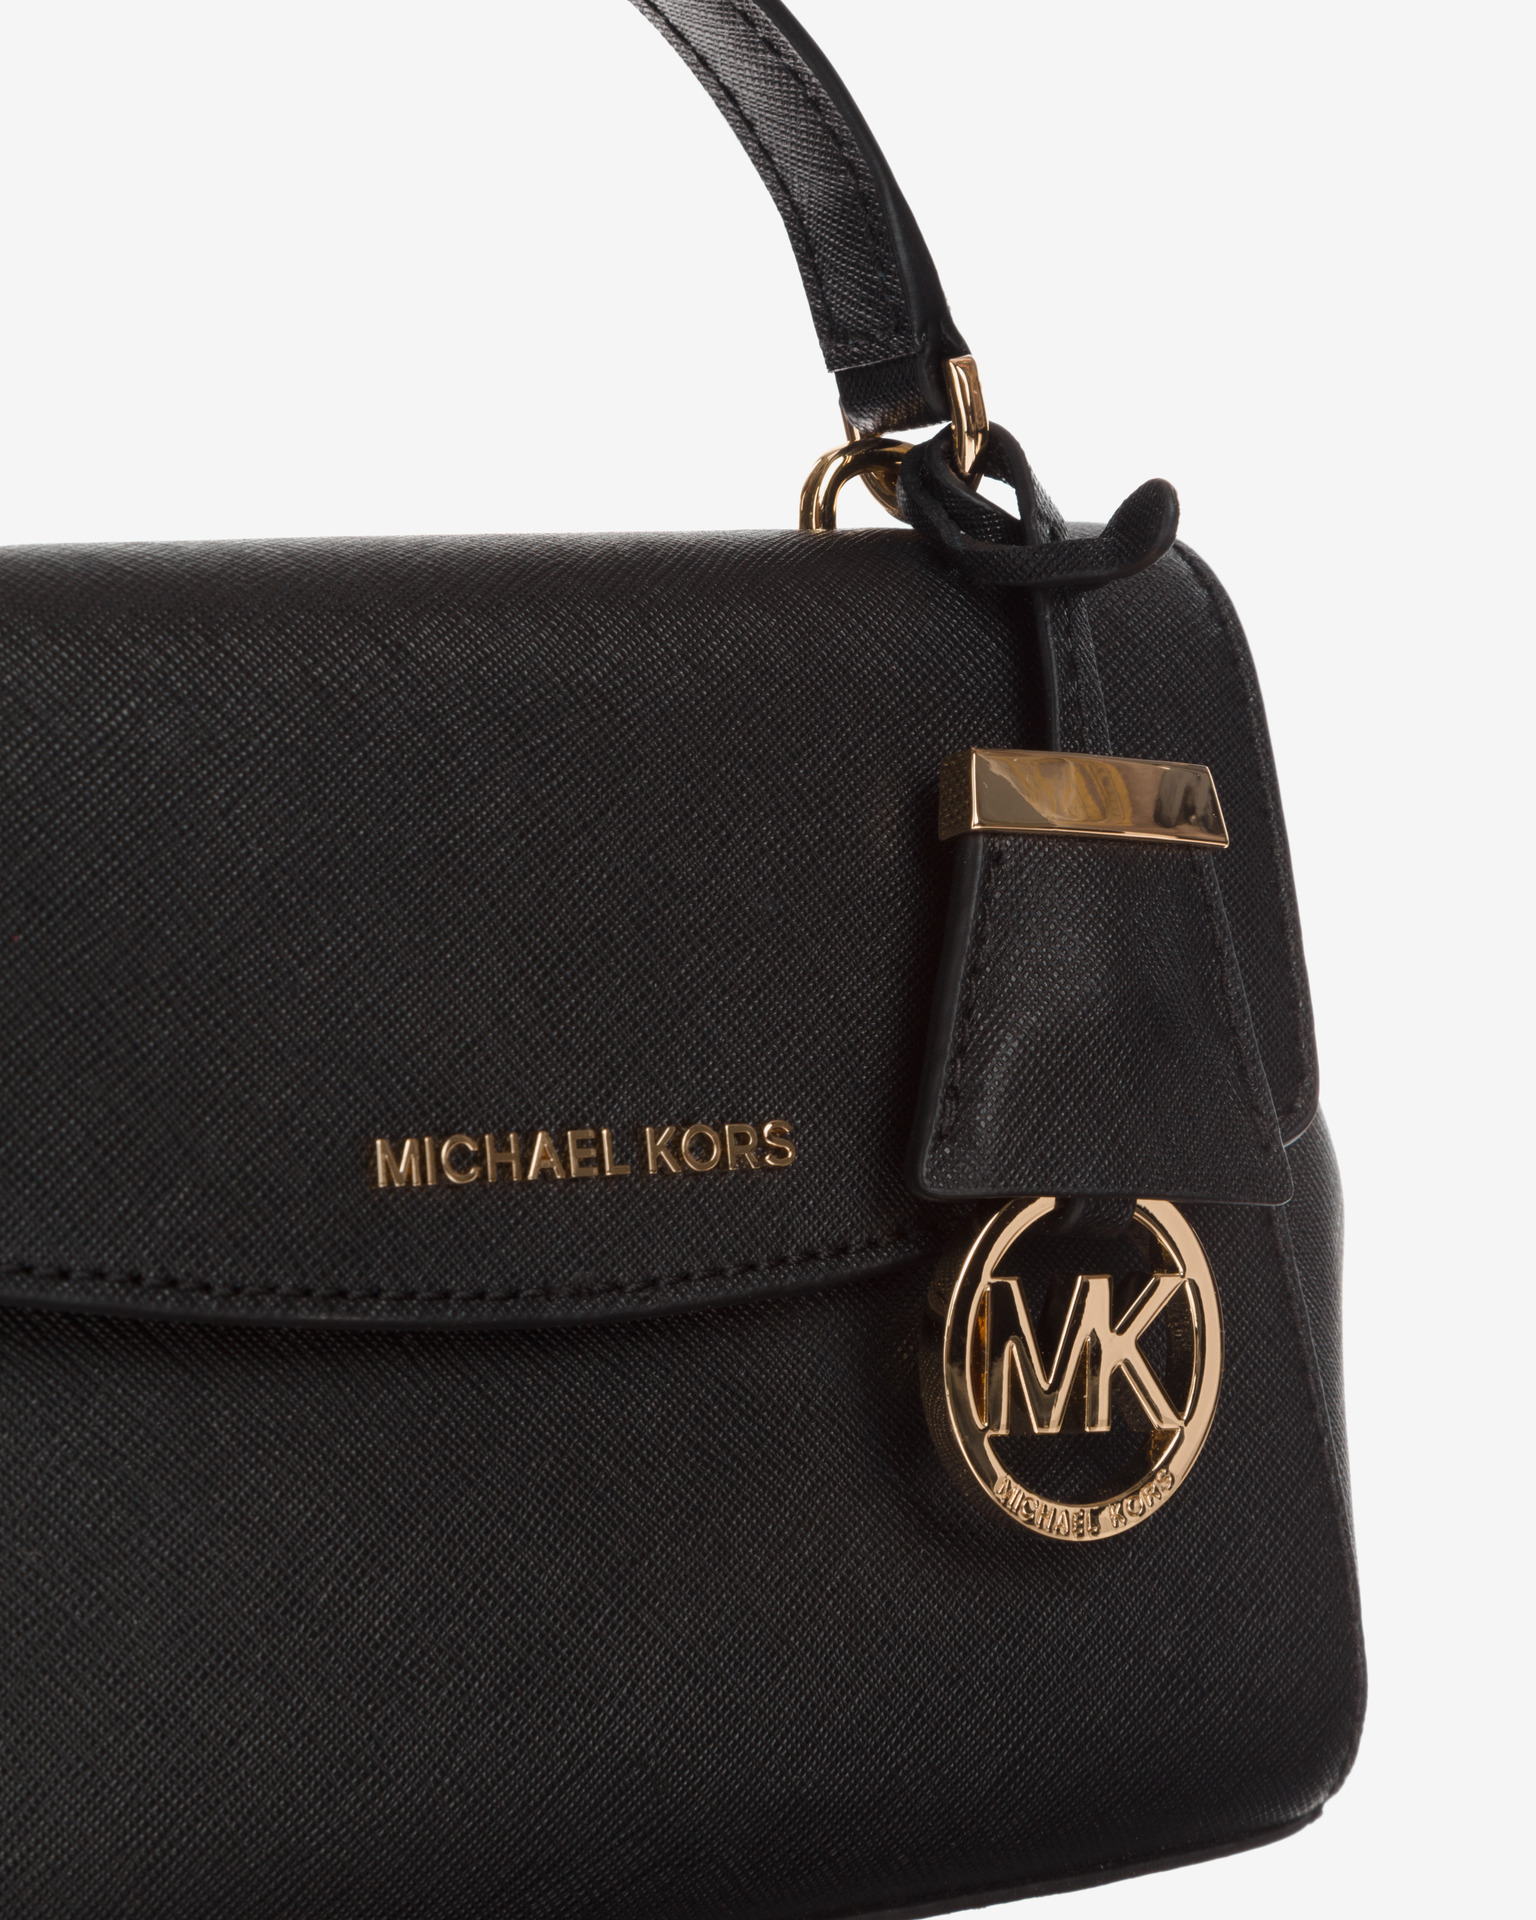 Michael Kors Ava Medium Saffiano Leather Crossbody  Michael kors leather  bag, Michael kors ava, Saffiano leather